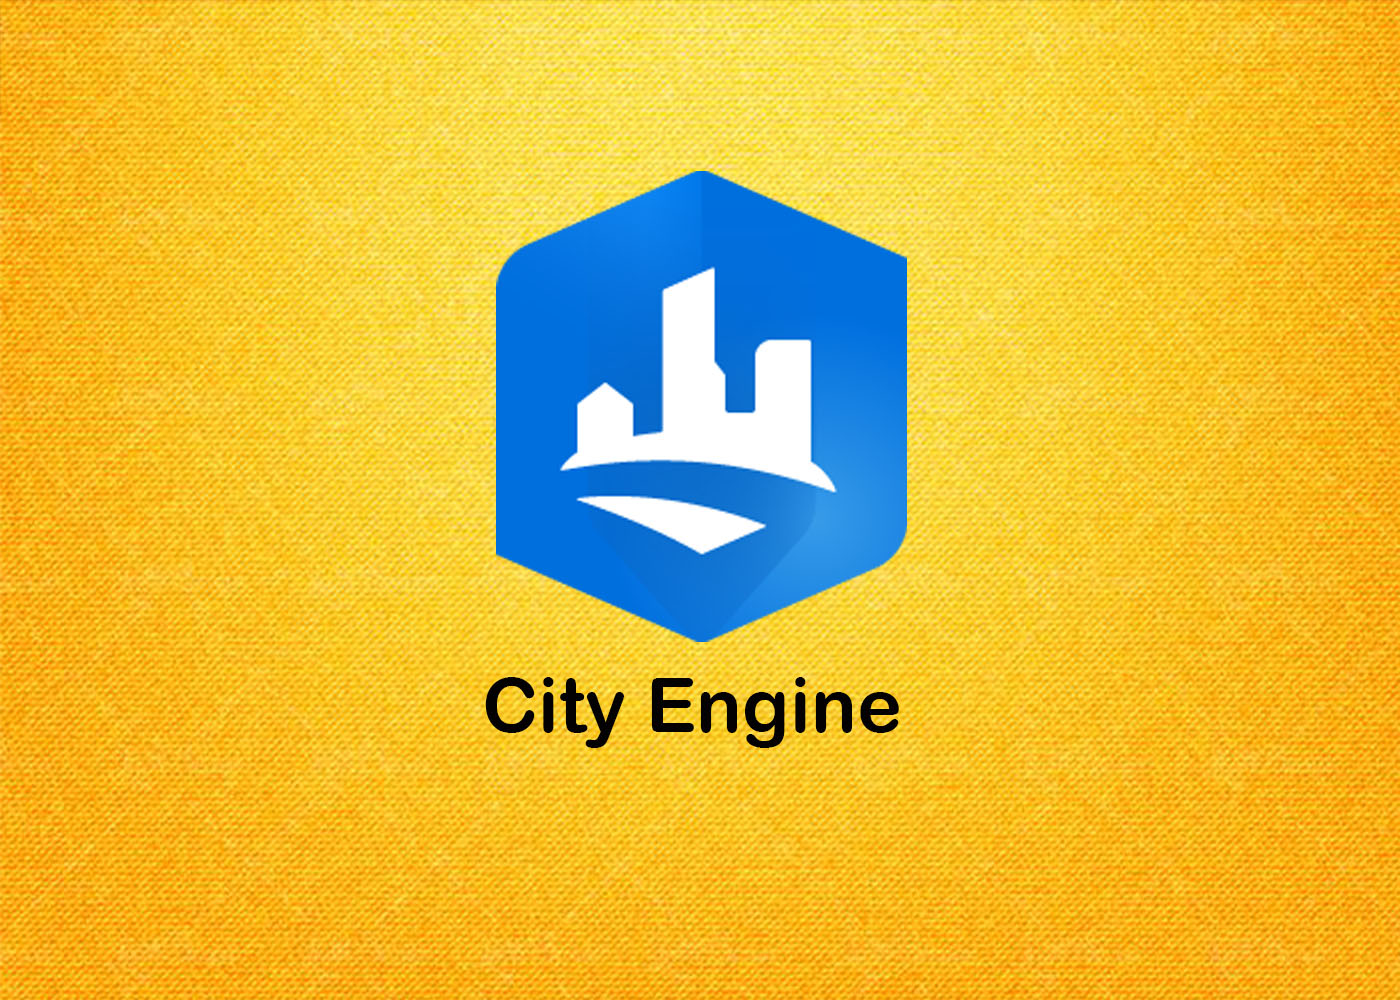 City Engine